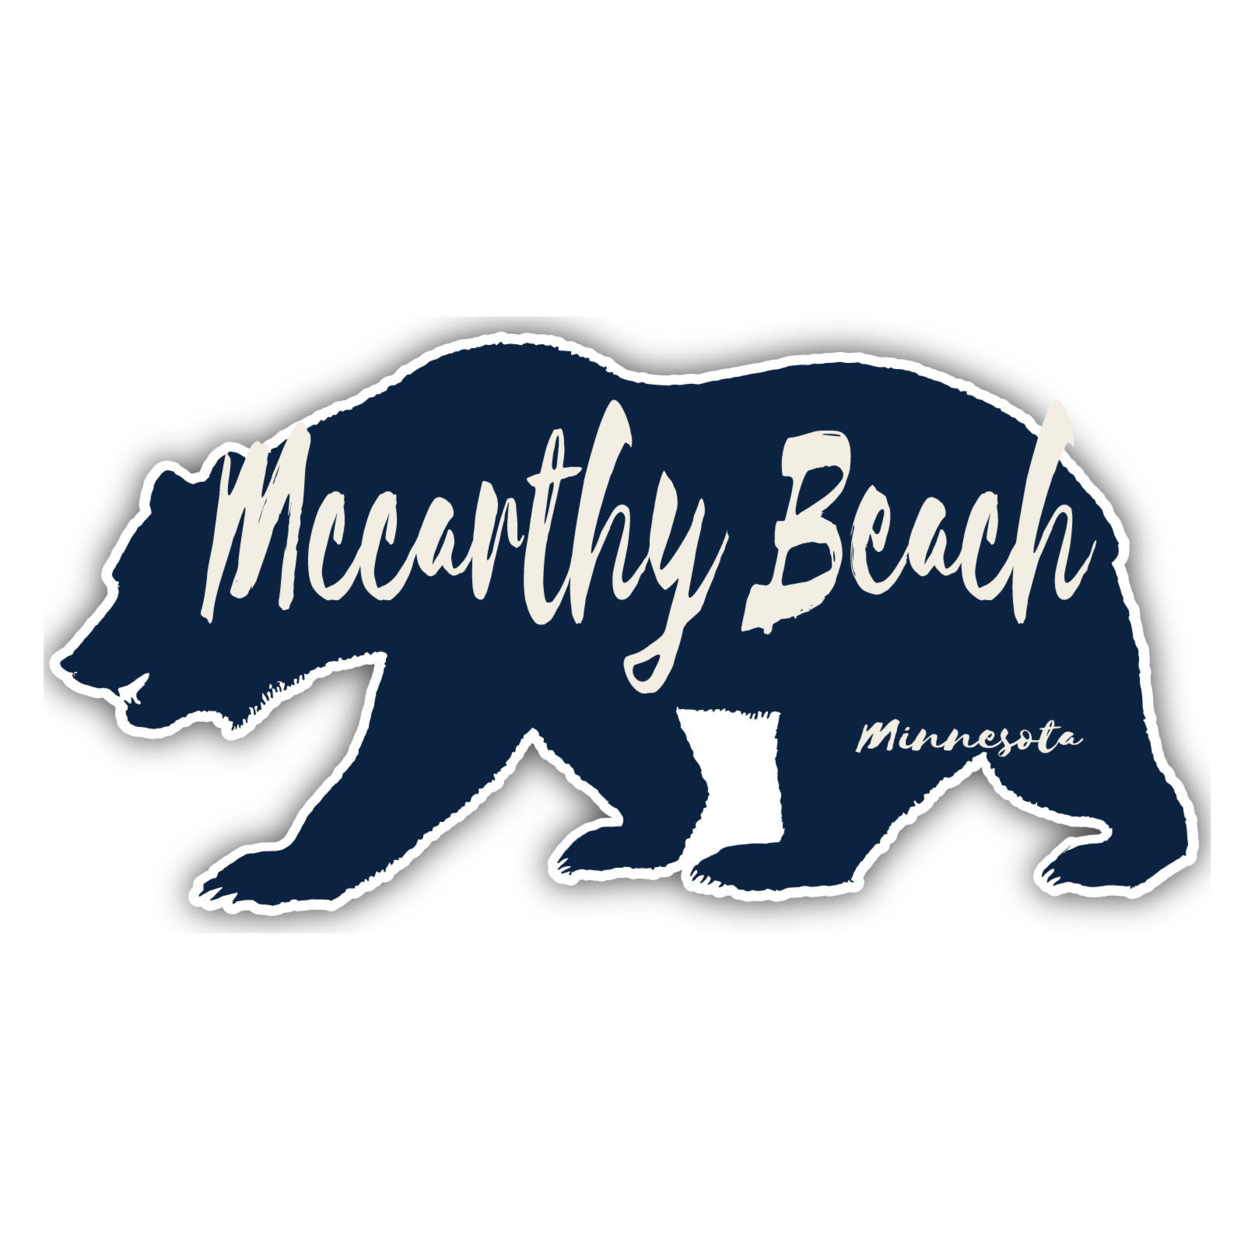 Mccarthy Beach Minnesota Souvenir Decorative Stickers (Choose Theme And Size) - 2-Inch, Bear